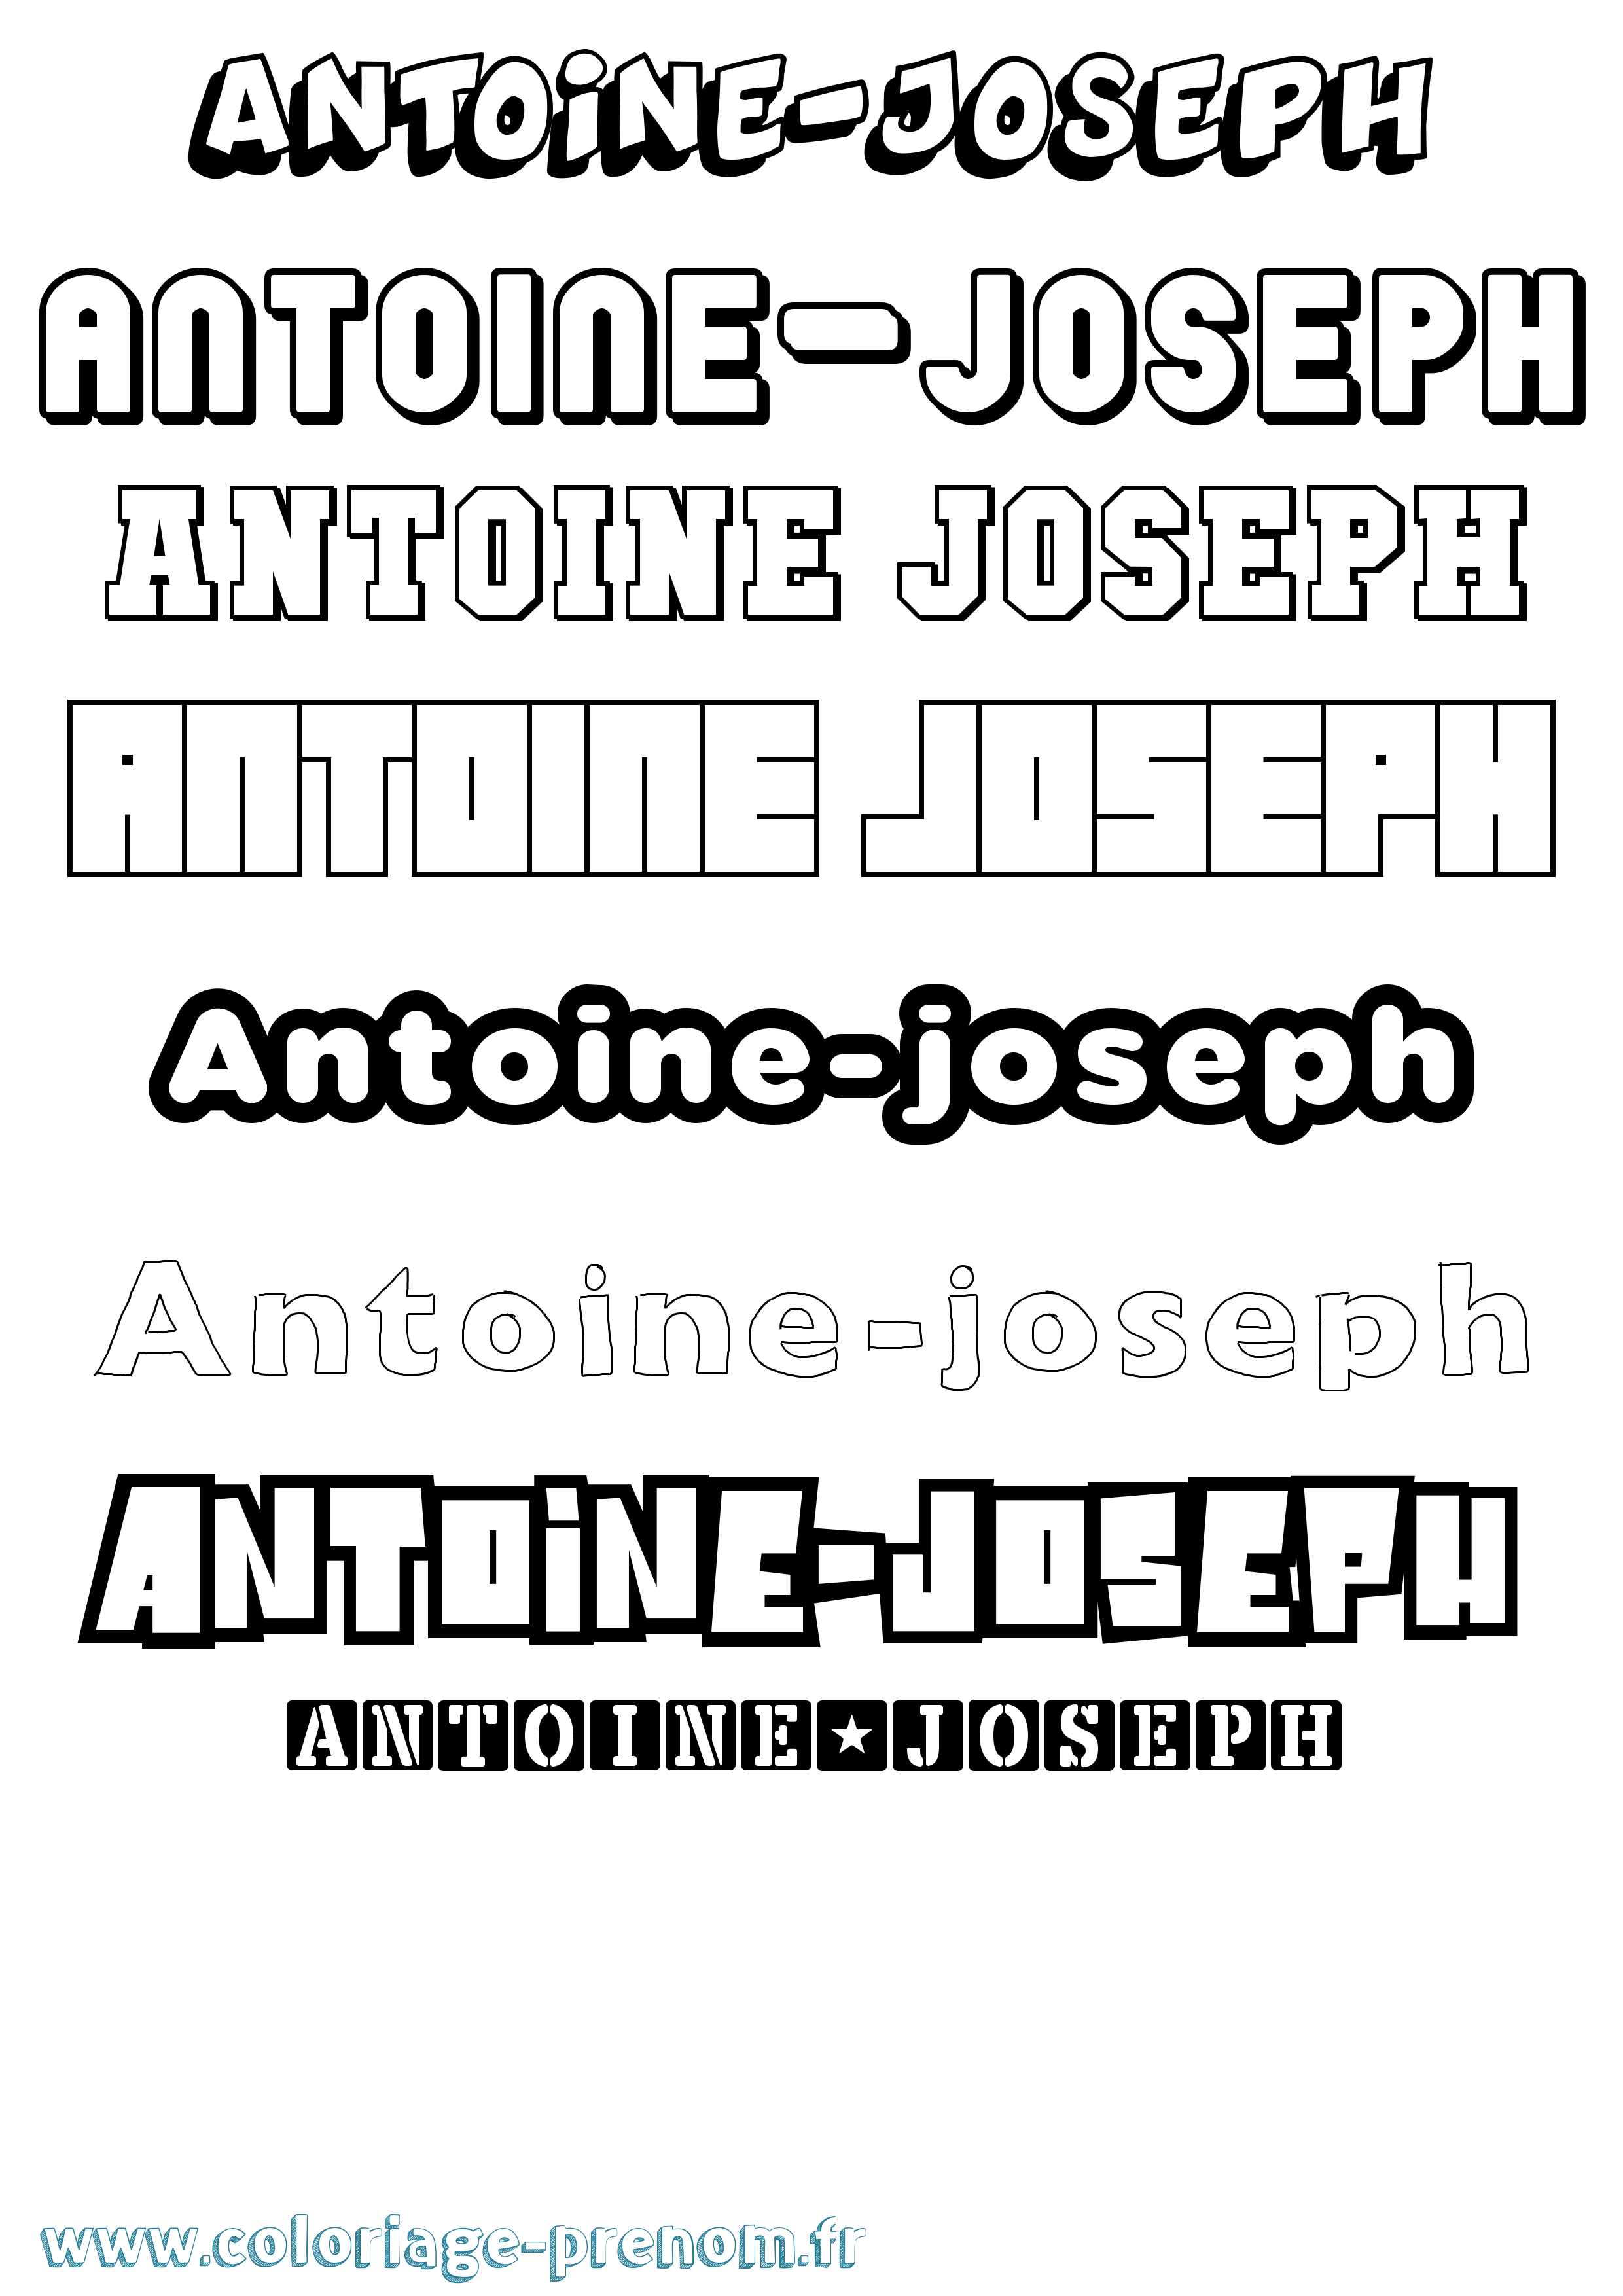 Coloriage prénom Antoine-Joseph Simple